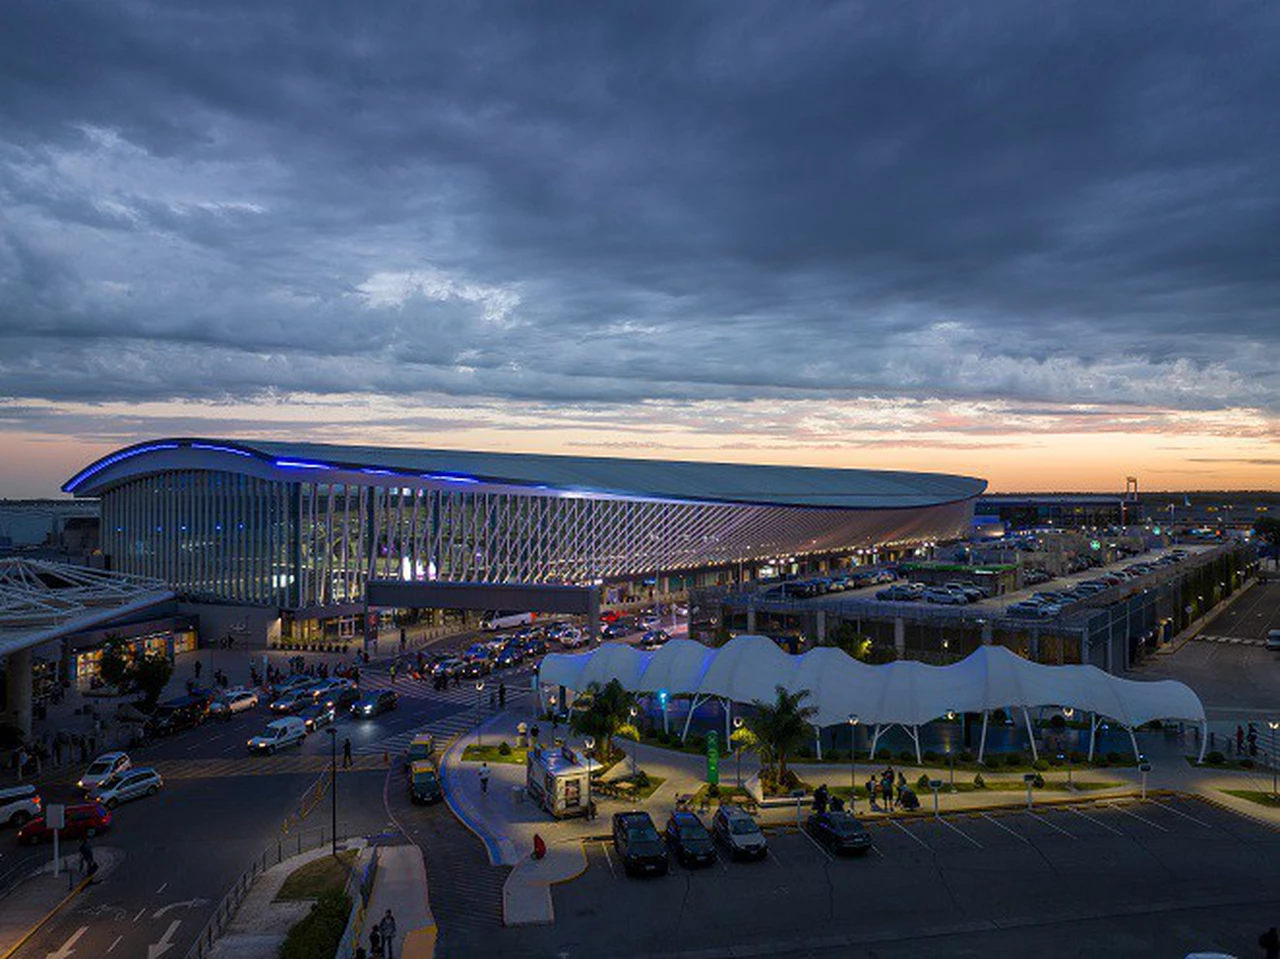 Aeropuerto de Ezeiza: cómo será la nueva terminal "futurista" del grupo Eurnekian